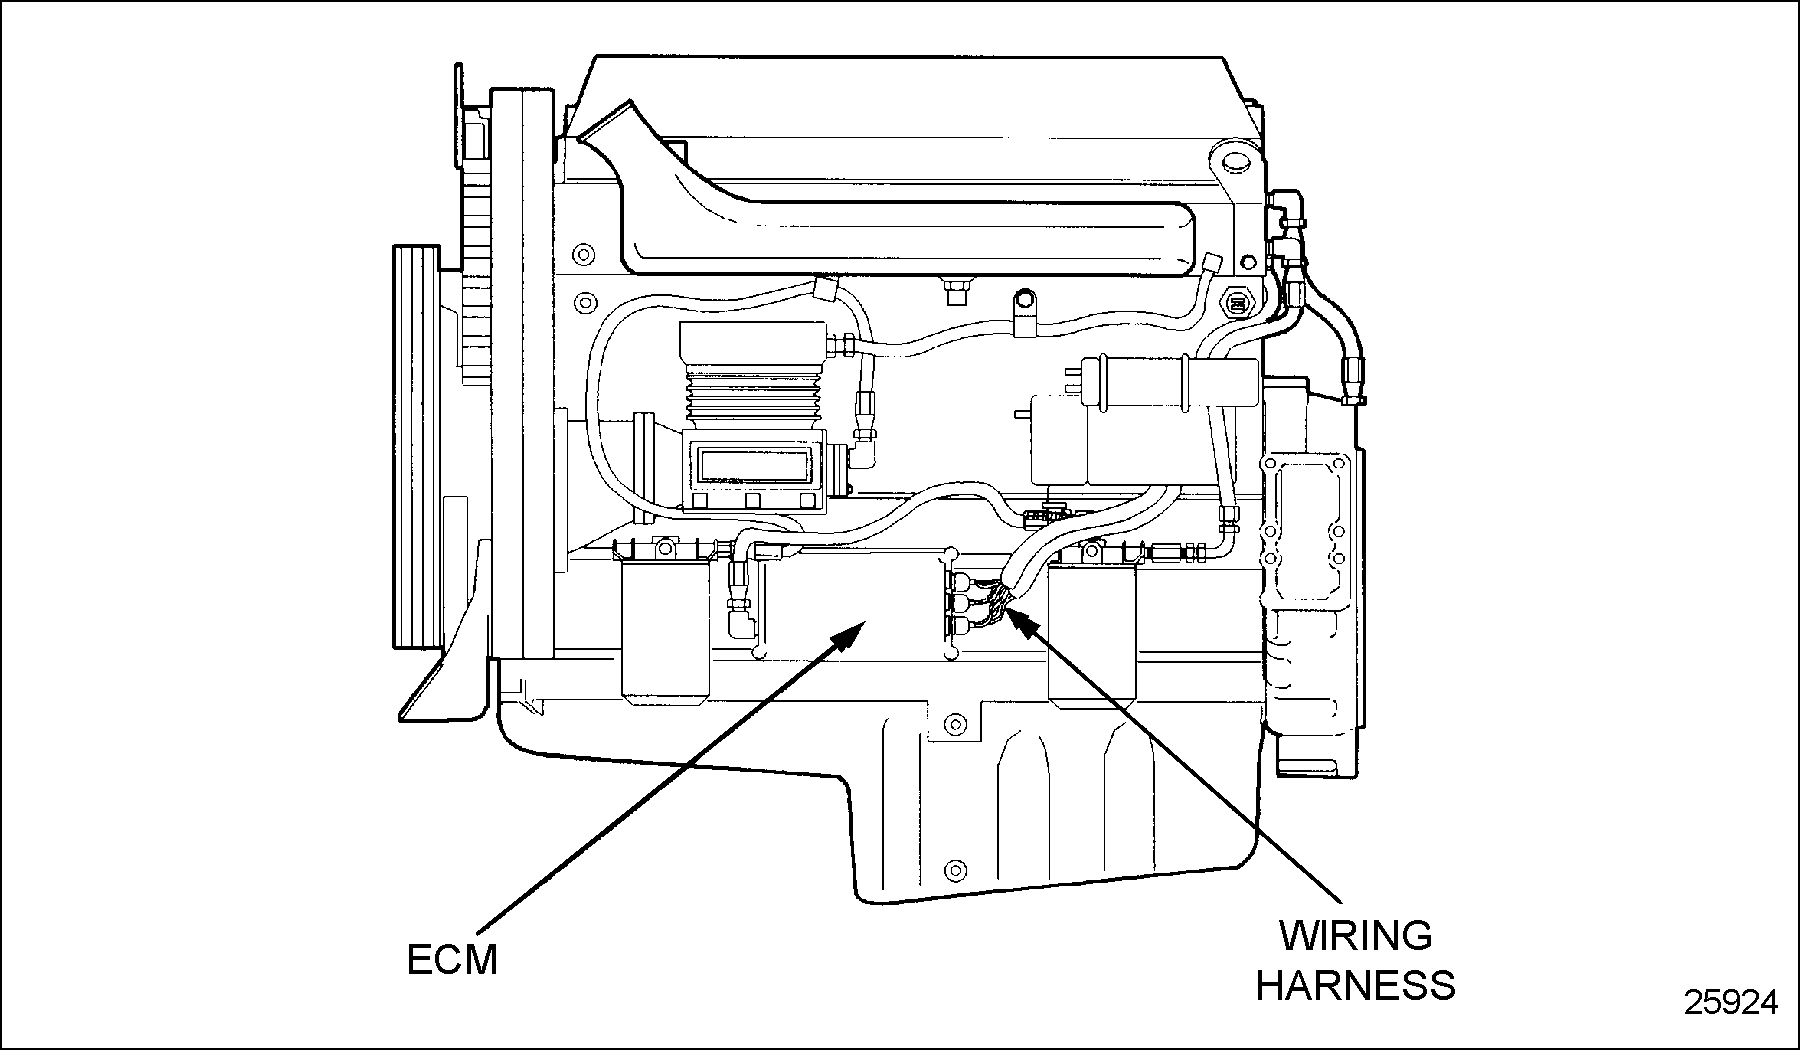 2006 International 4300 Wiring Diagram - Car Engine Diagram Images